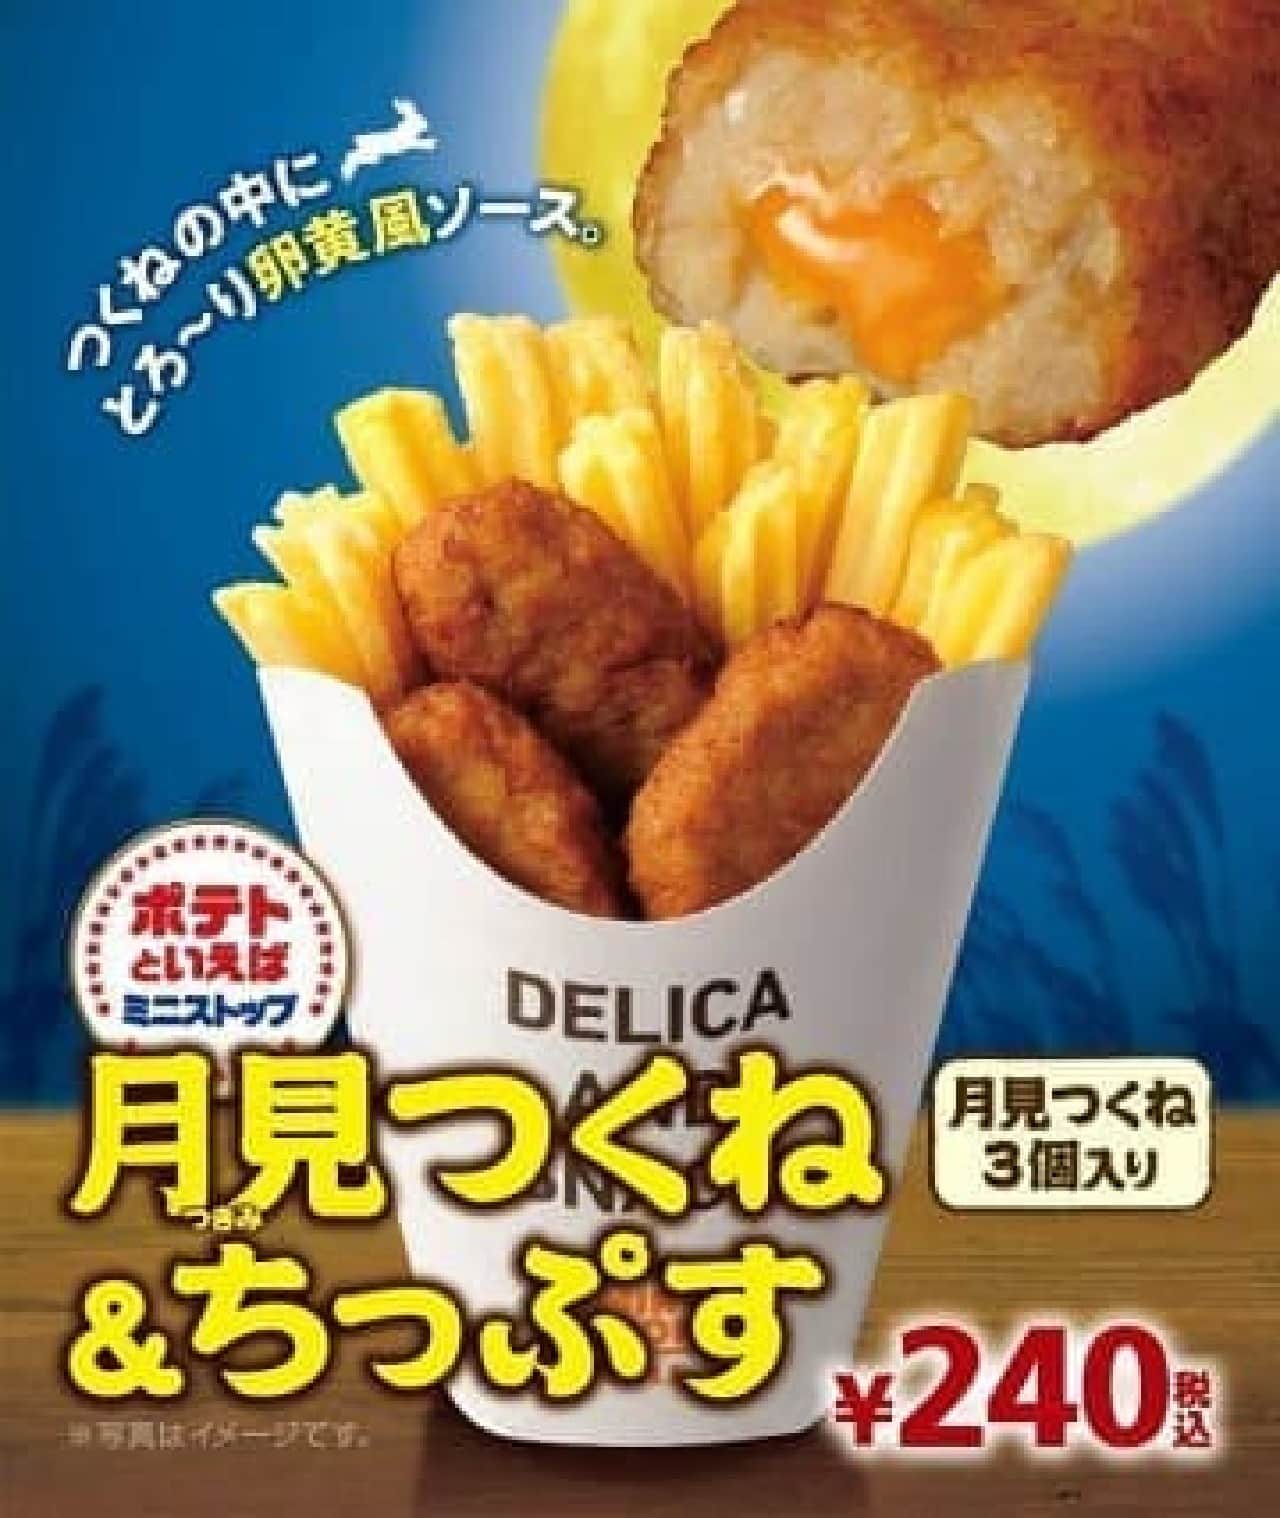 Ministop "Tsukimi Tsukune & Chips"